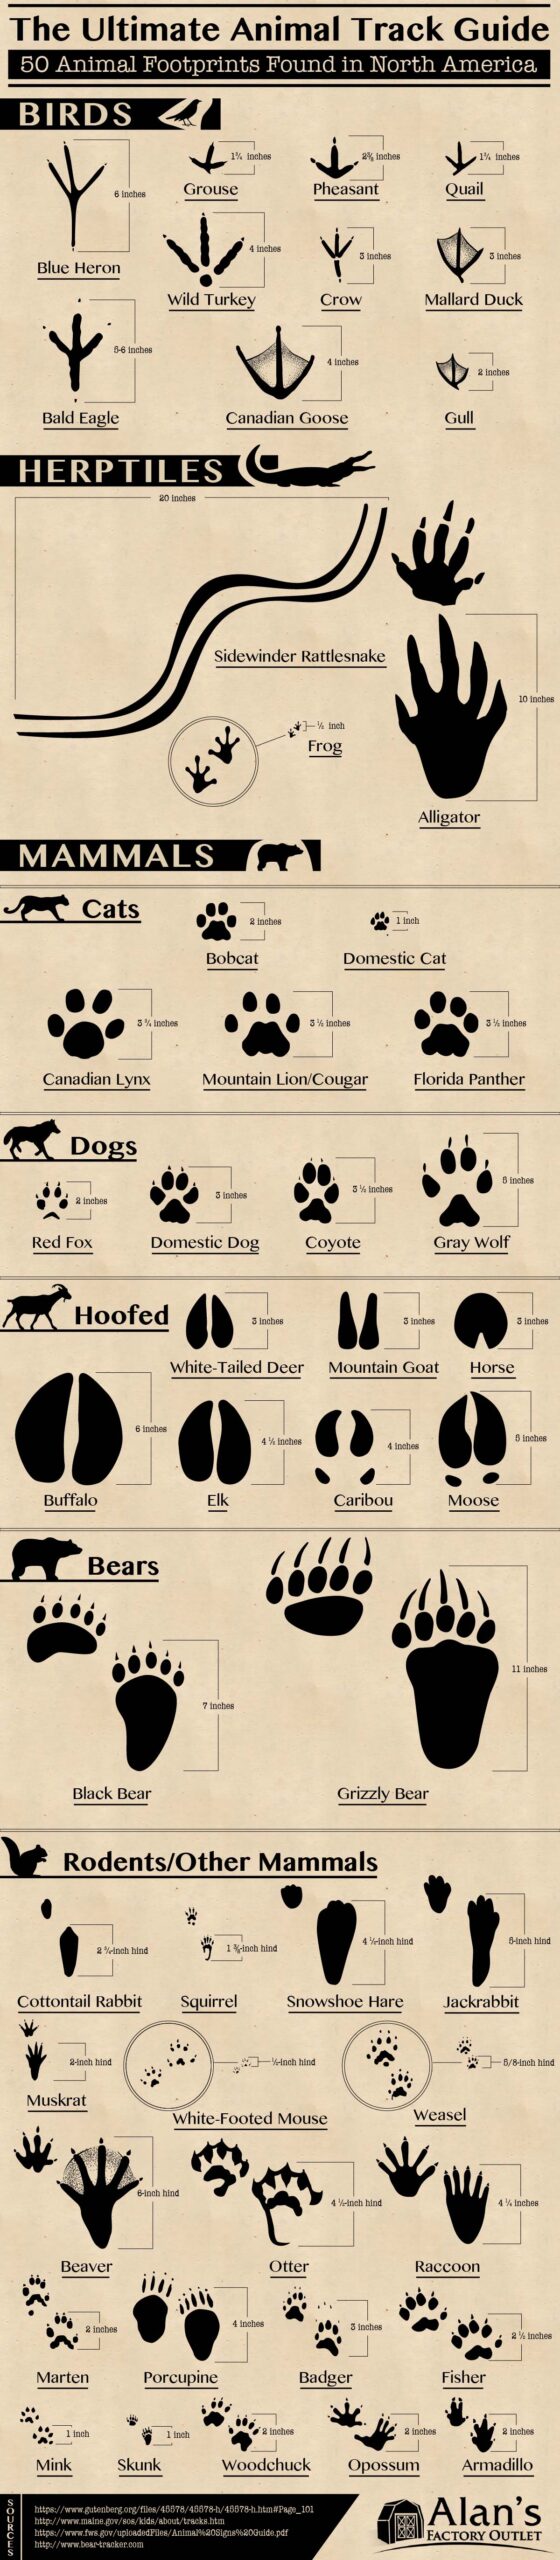 50 animal footprints North America - CarbonTV Blog